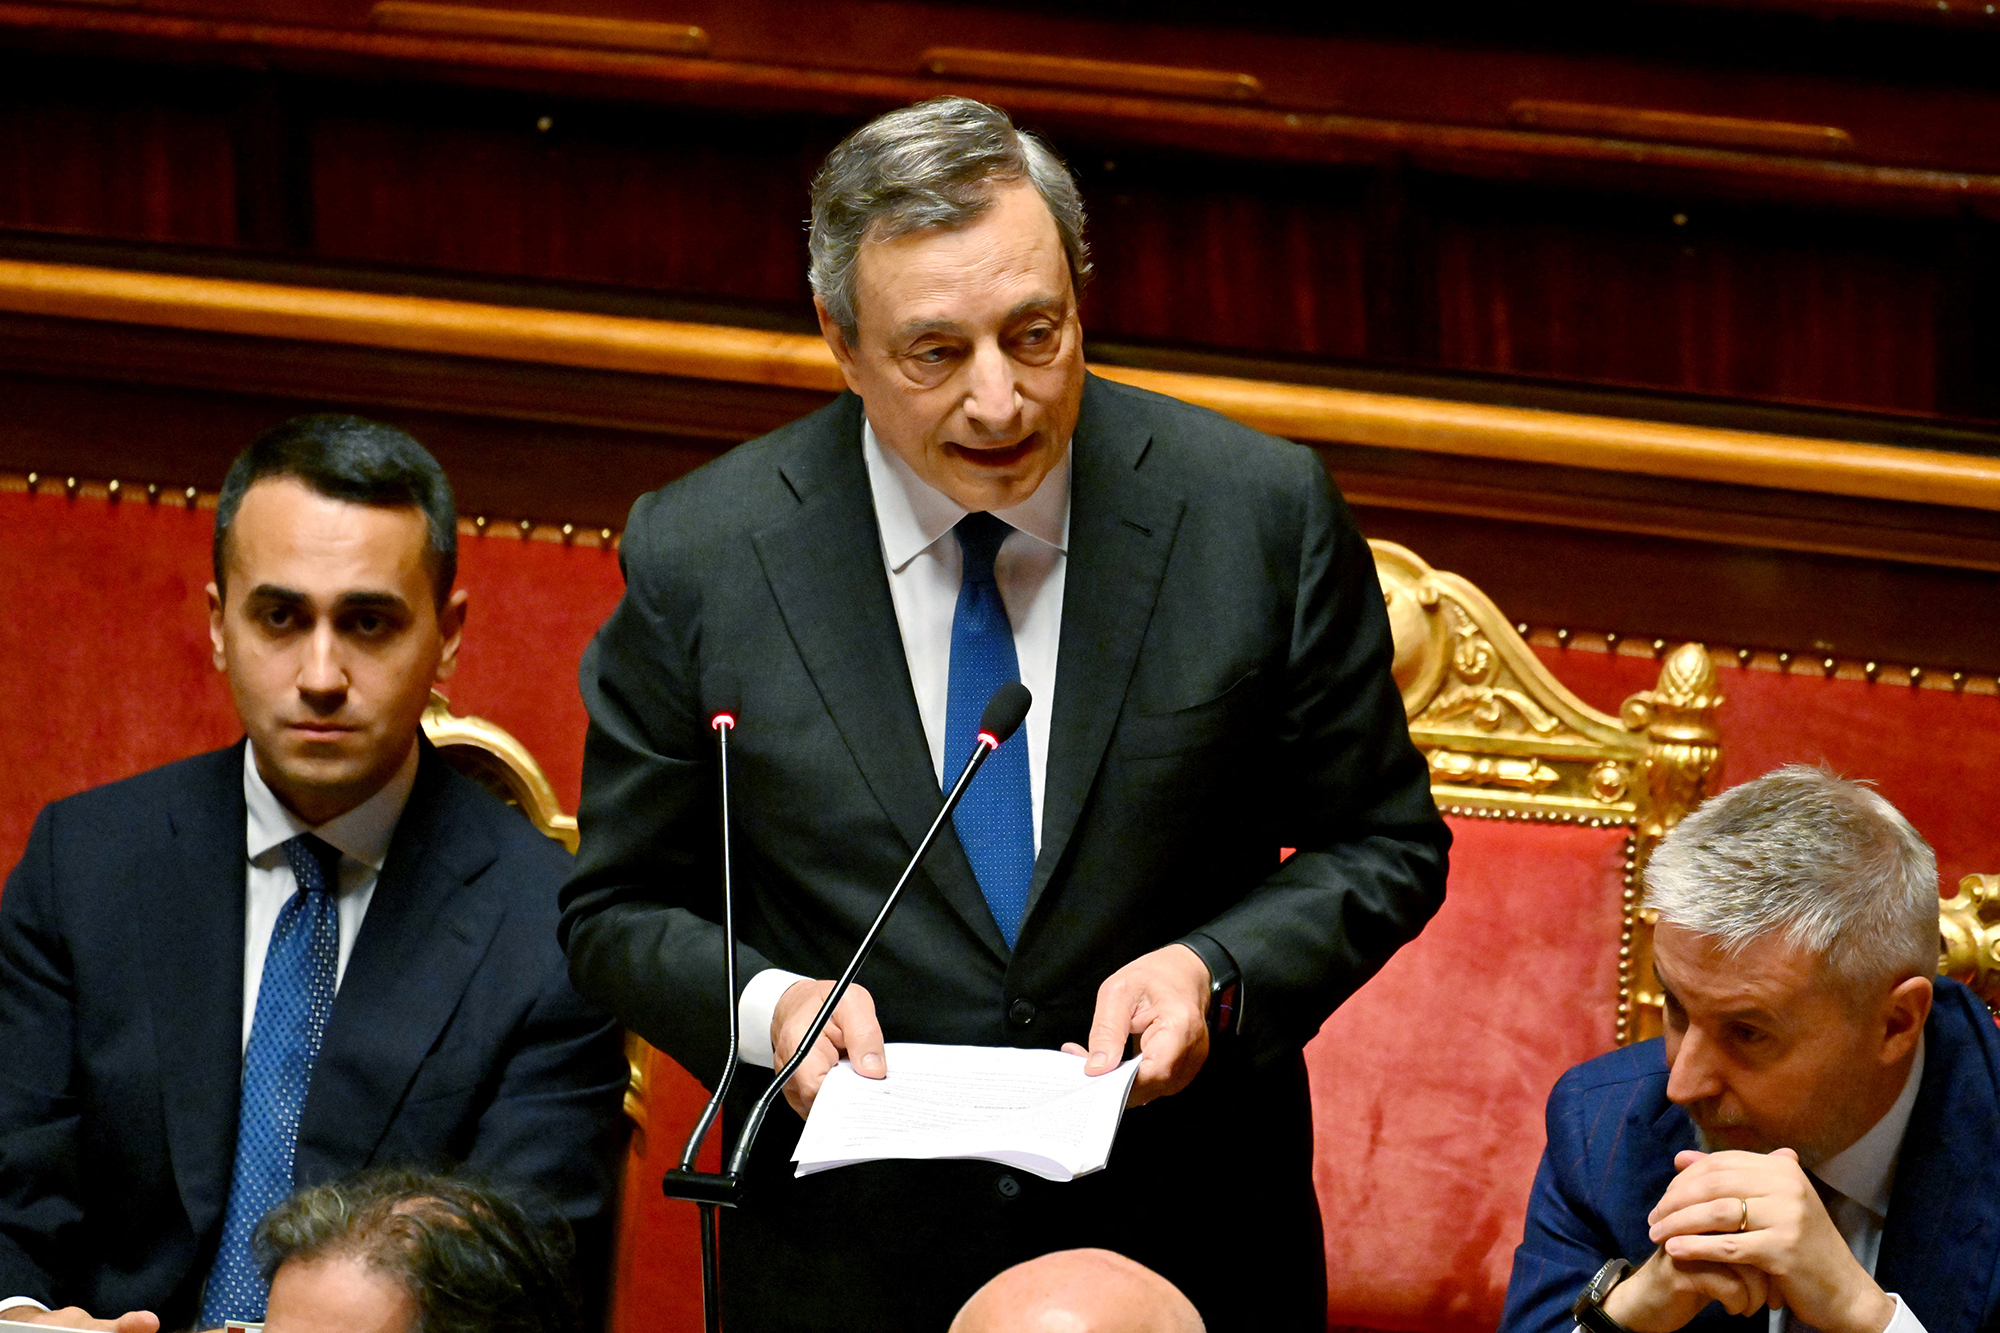 Mario Draghi bei seiner Rede im Senat (Bild: Andreas Solaro/AFP)